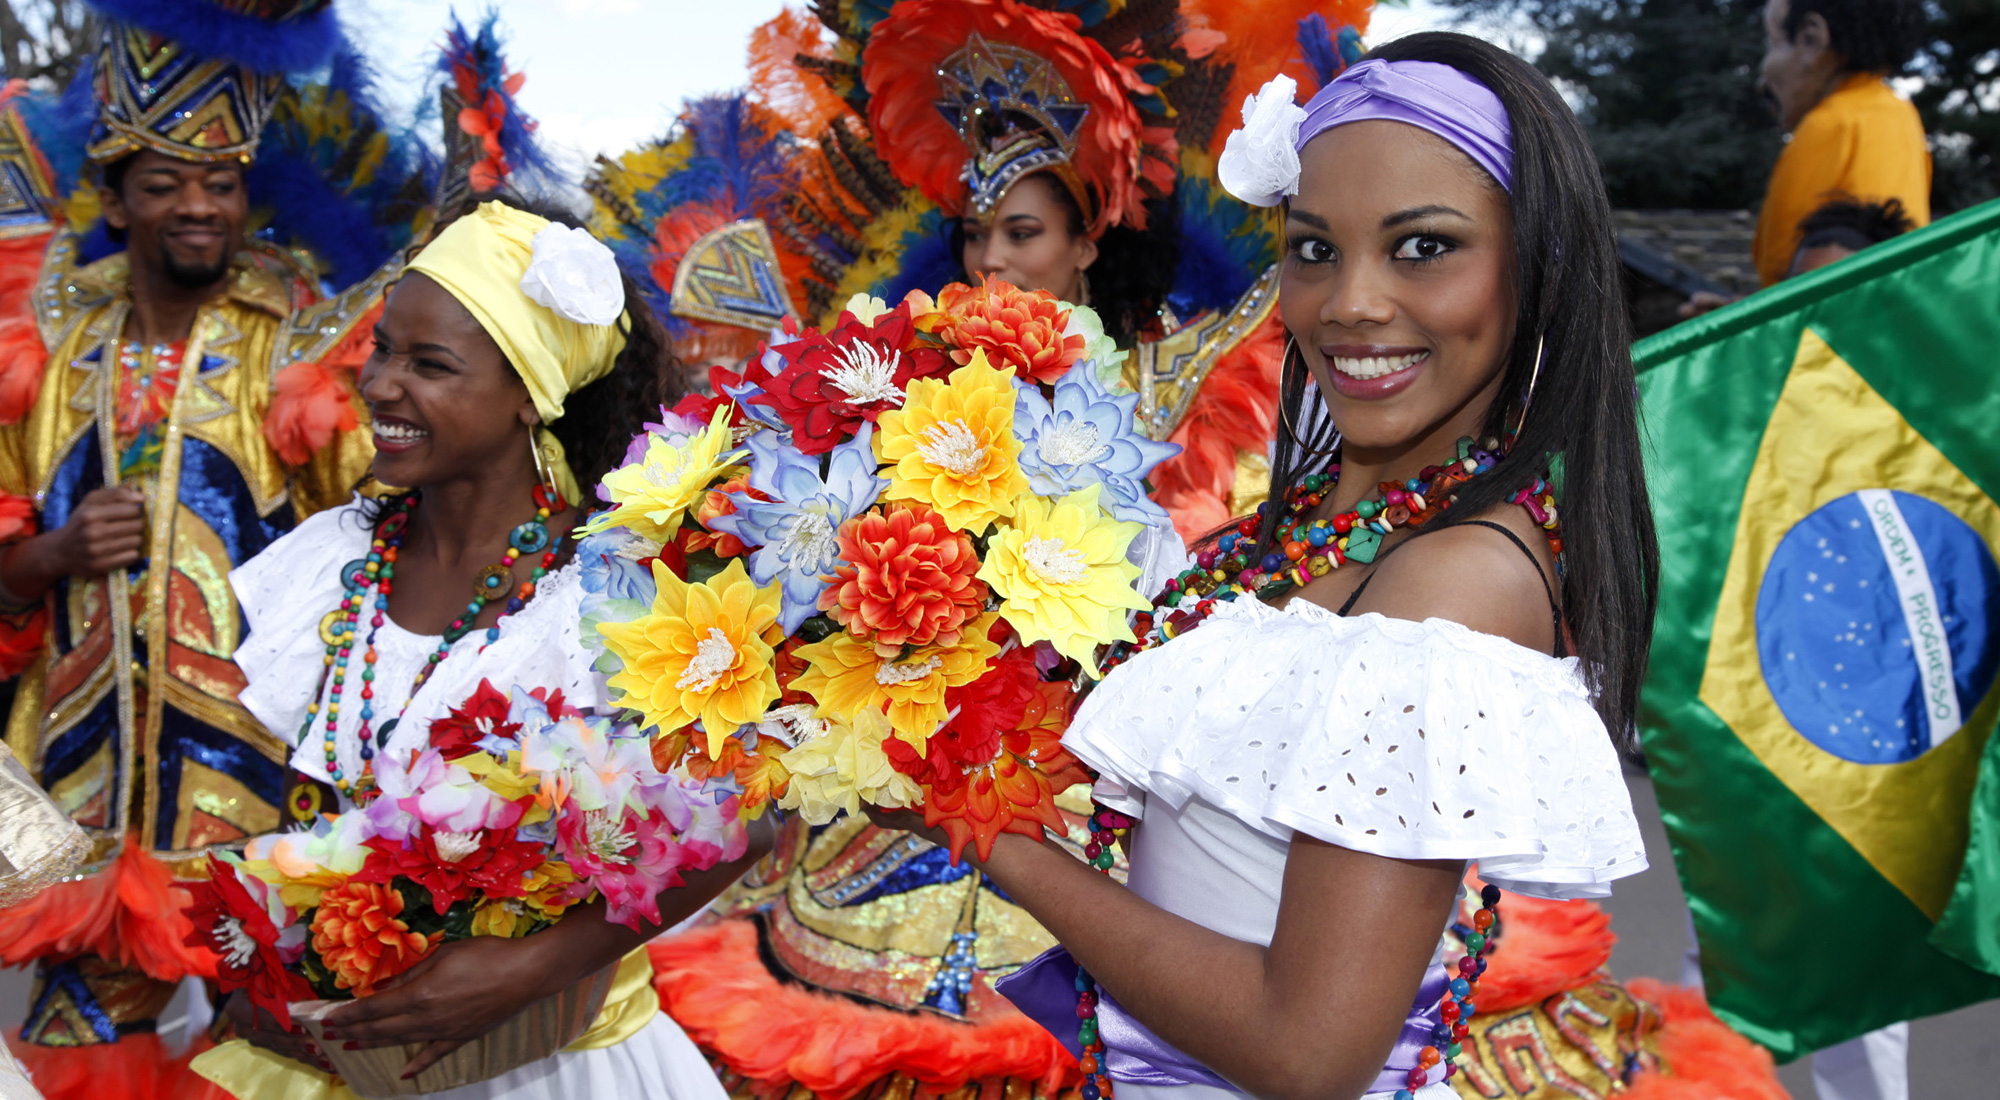 Brazil brings festivities to the Jardin d’Acclimatation - LVMH